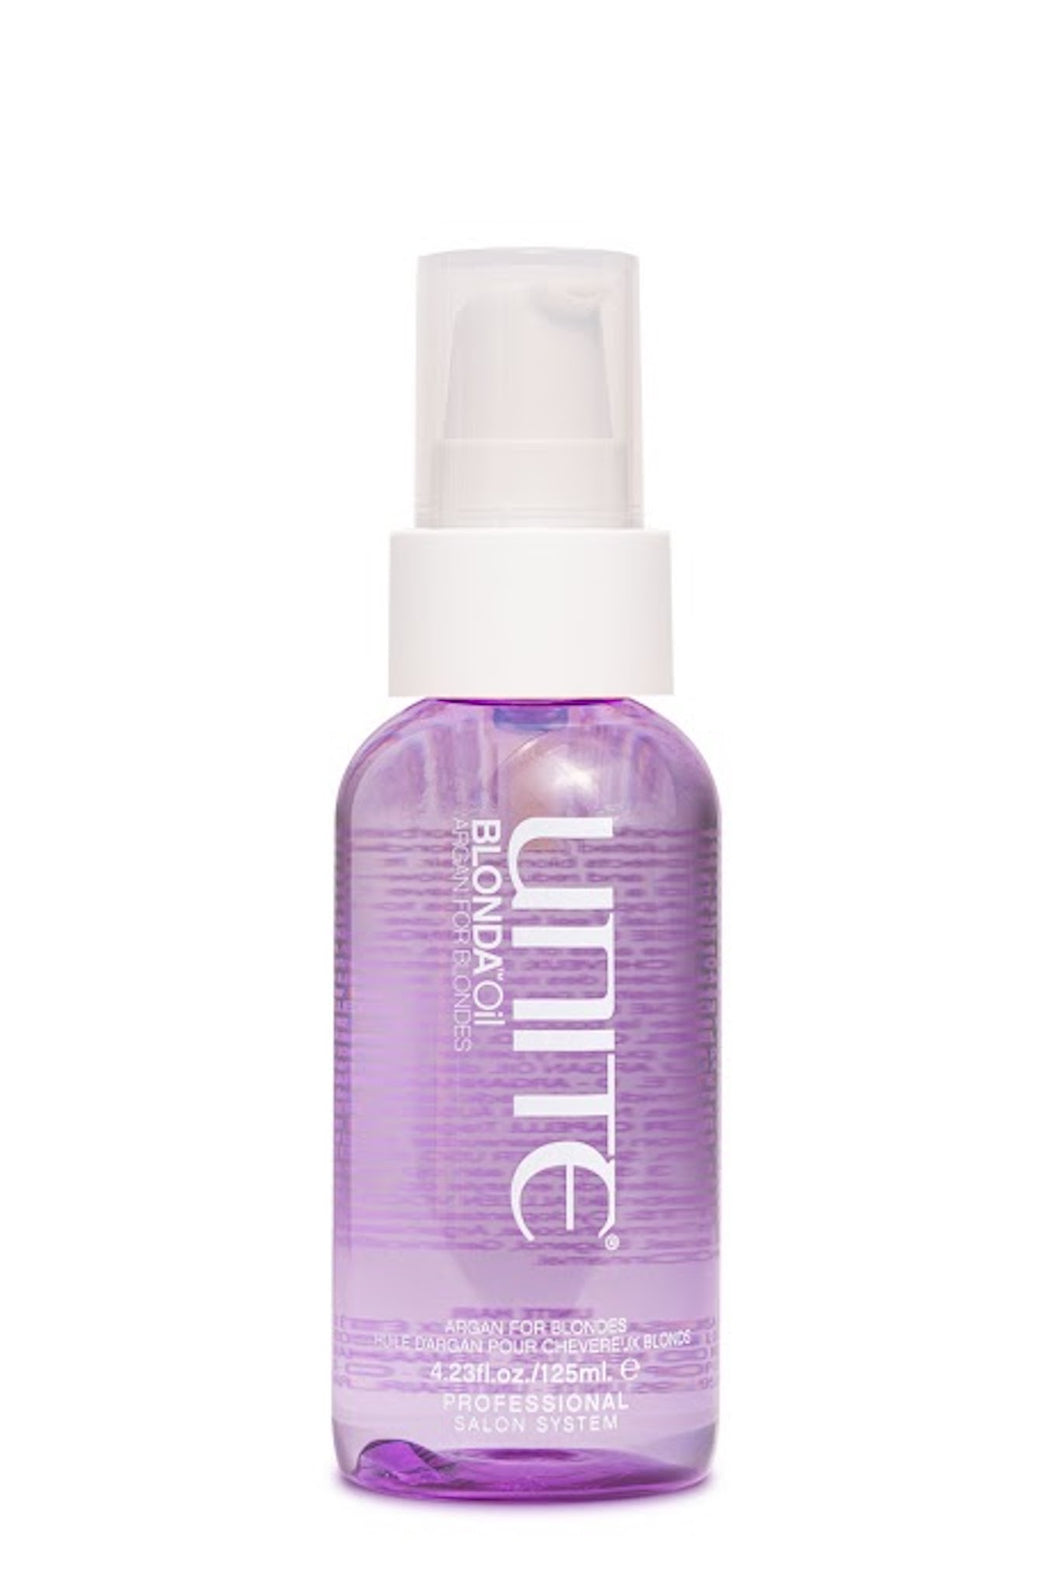 Unite - BLONDA Oil clear bottle with light purple oil. White pump top cap with lid.